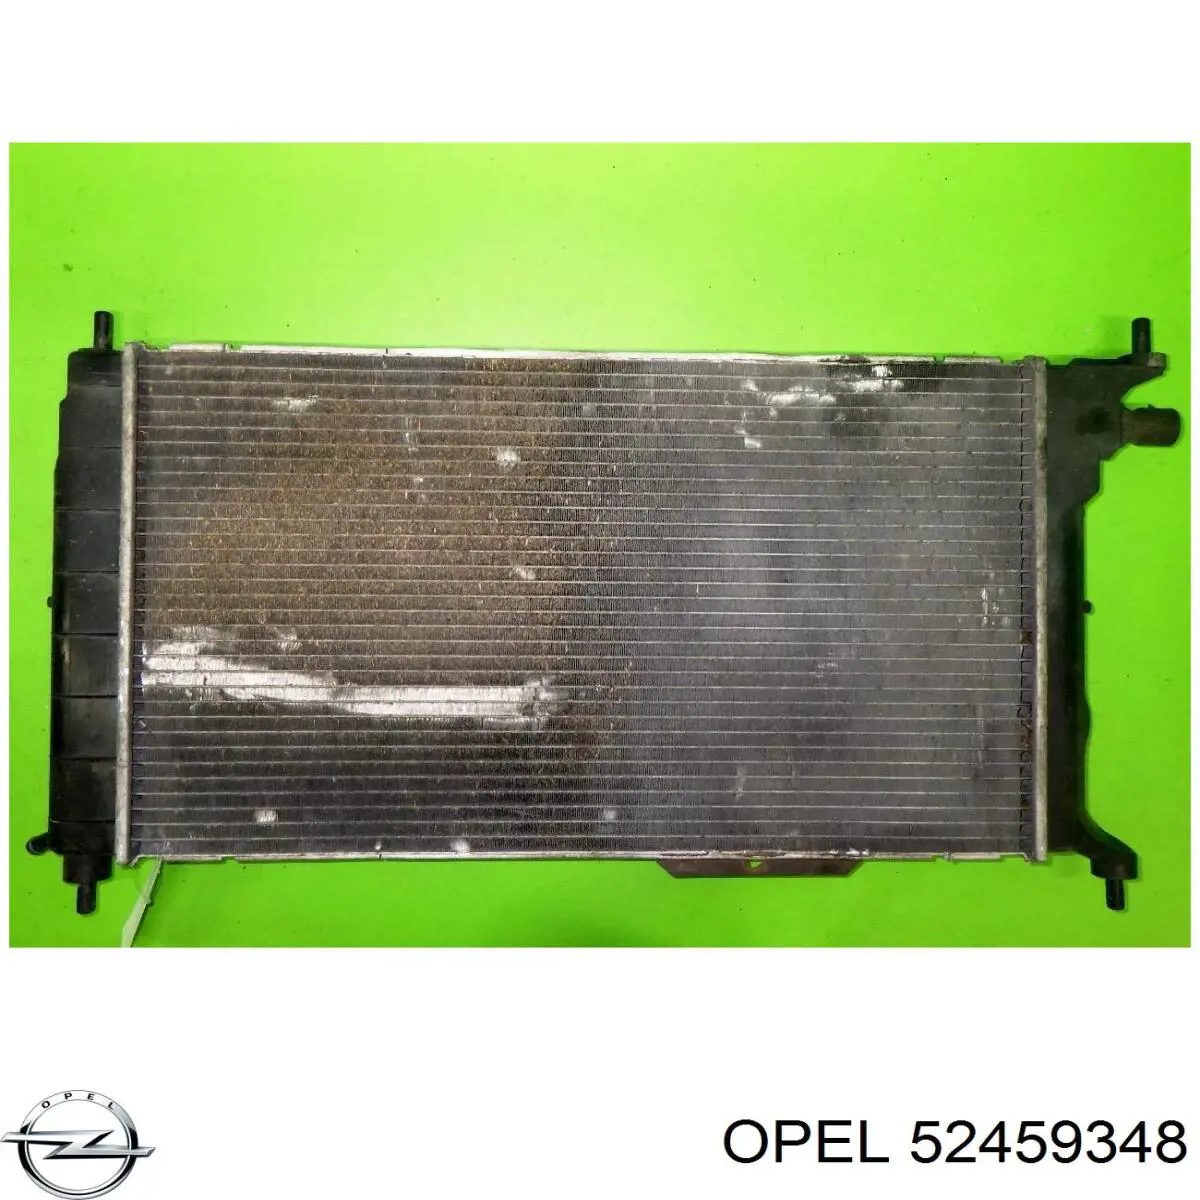 52459348 Opel radiador